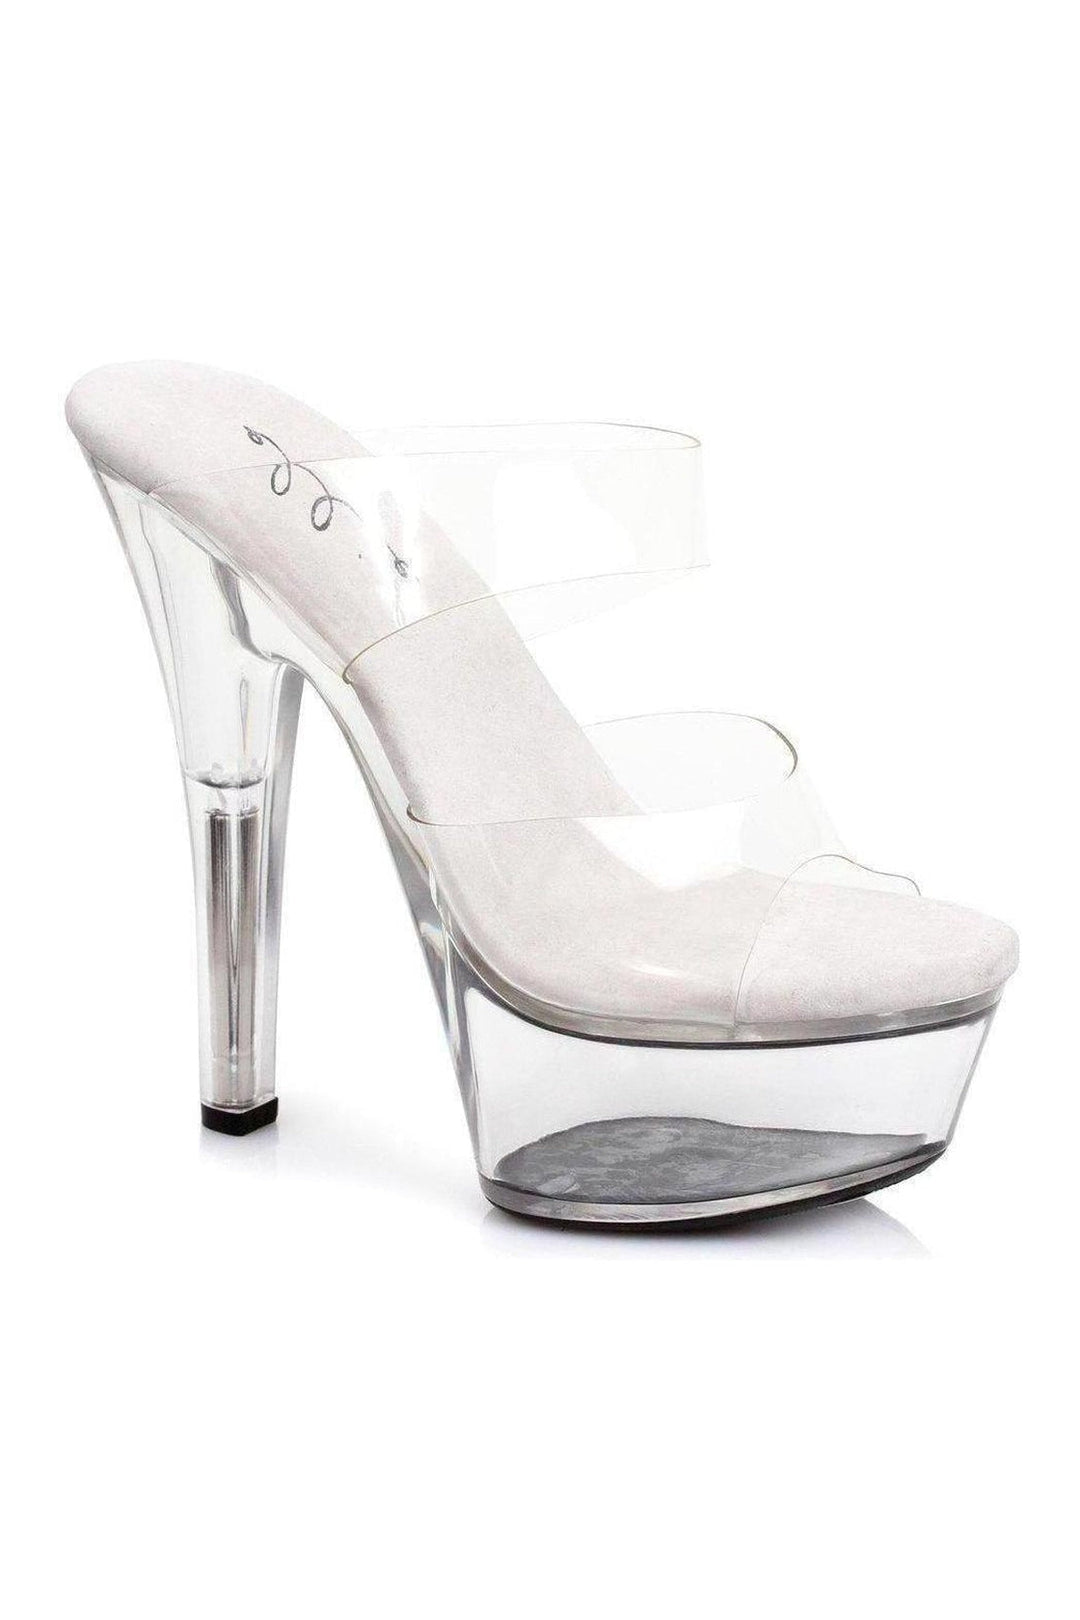 Ellie Shoes Clear Slides Platform Stripper Shoes | Buy at Sexyshoes.com